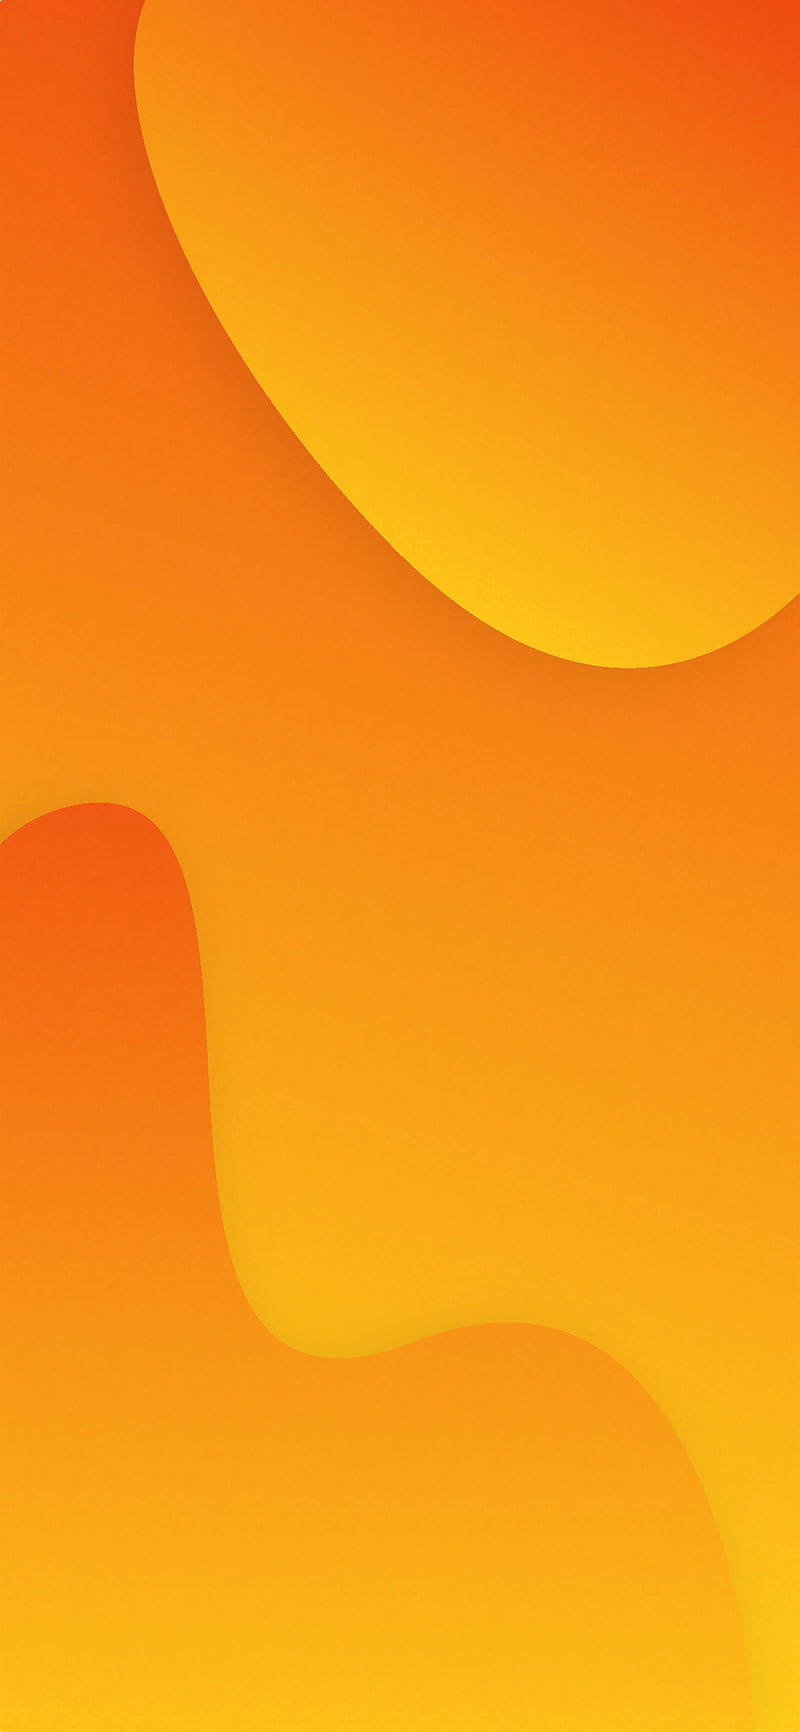 Abstract Waves Orange Phone Wallpaper